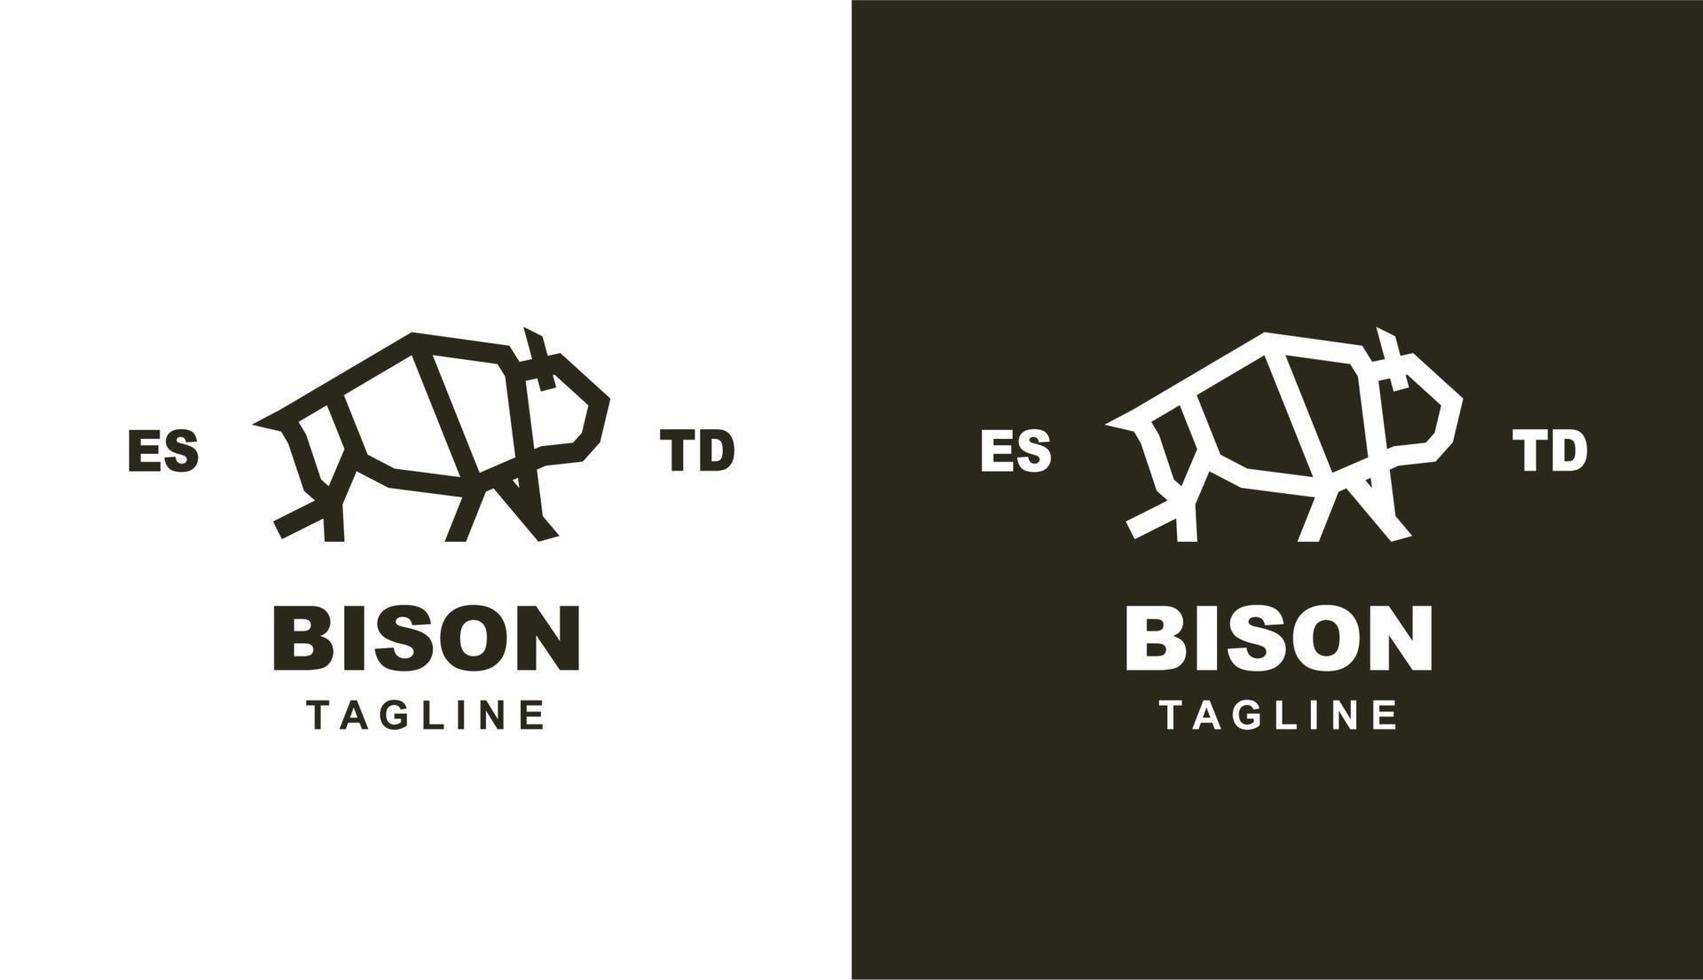 bison geometris monoline retro. touro simples para logotipo para marca e empresa vetor